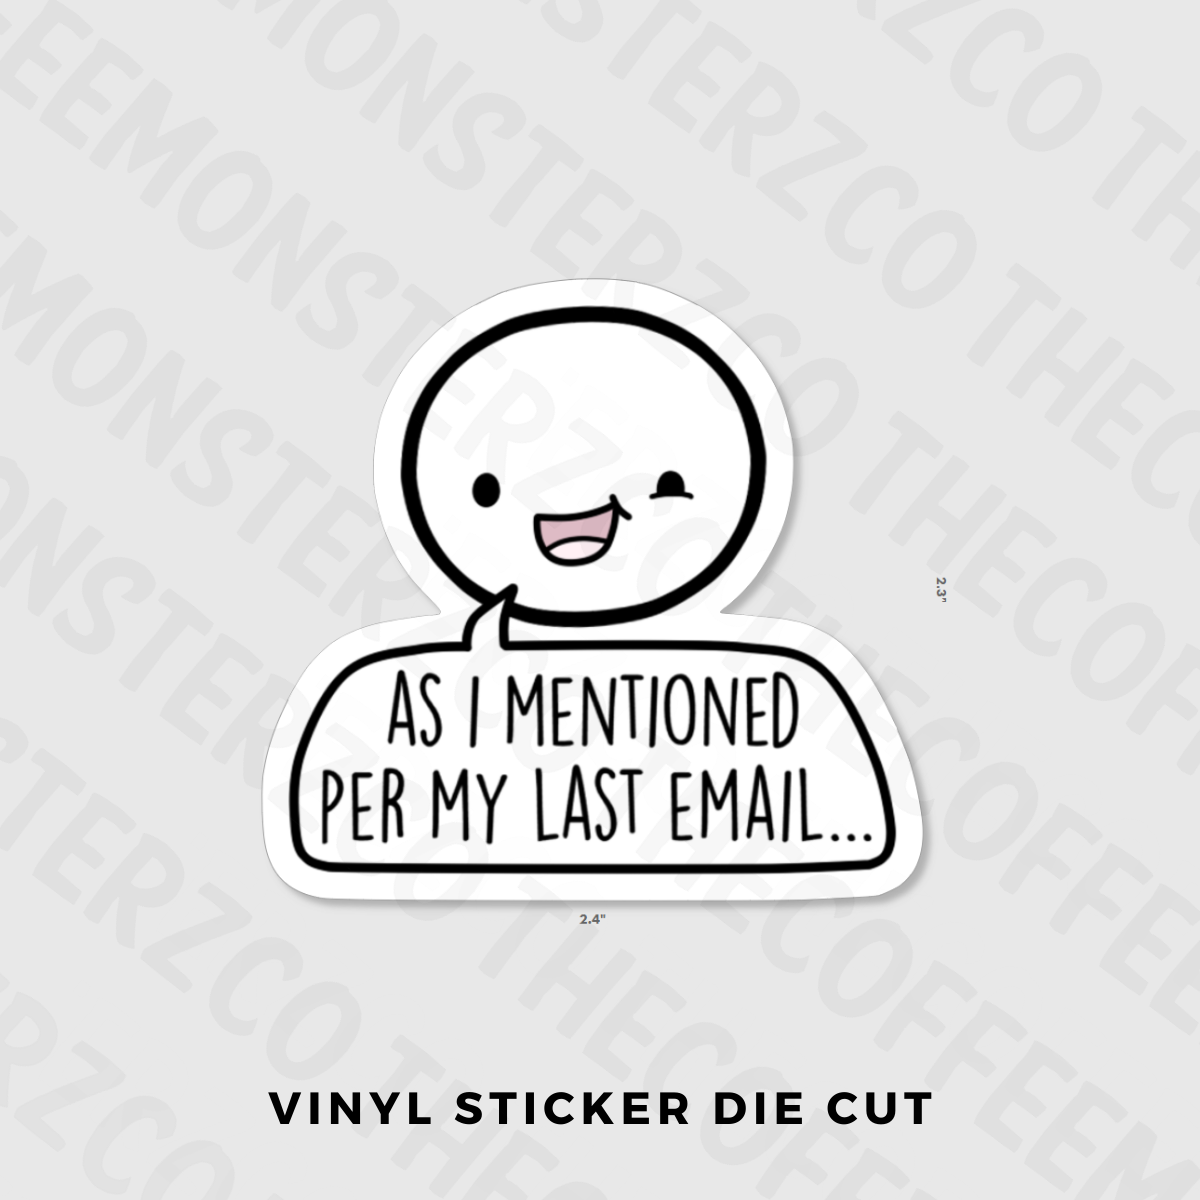 Corporate Vinyl Stickers (1 per customer)